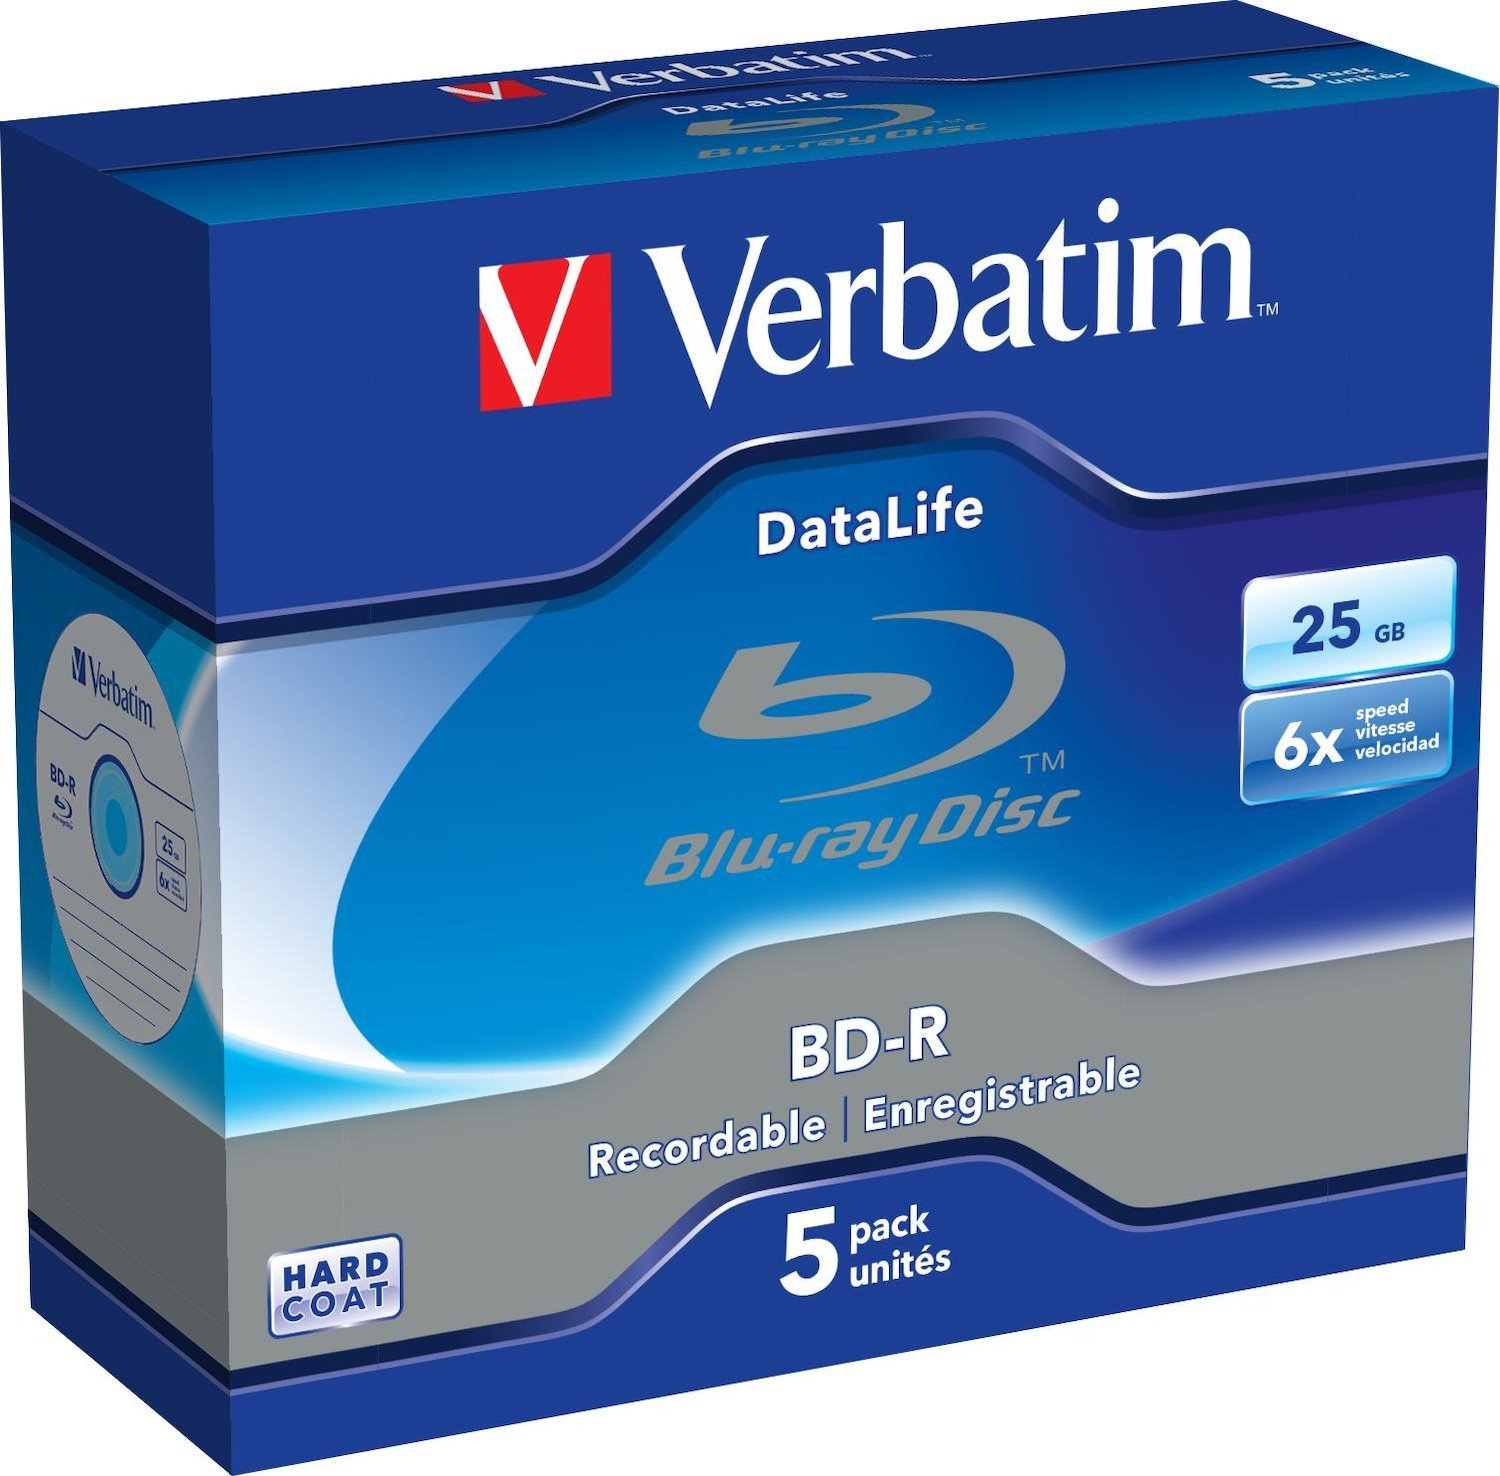 Verbatim DataLife Blu-ray Recordable Media - BD-R - 6x - 25 GB - 5 Pack Spindle - Retail